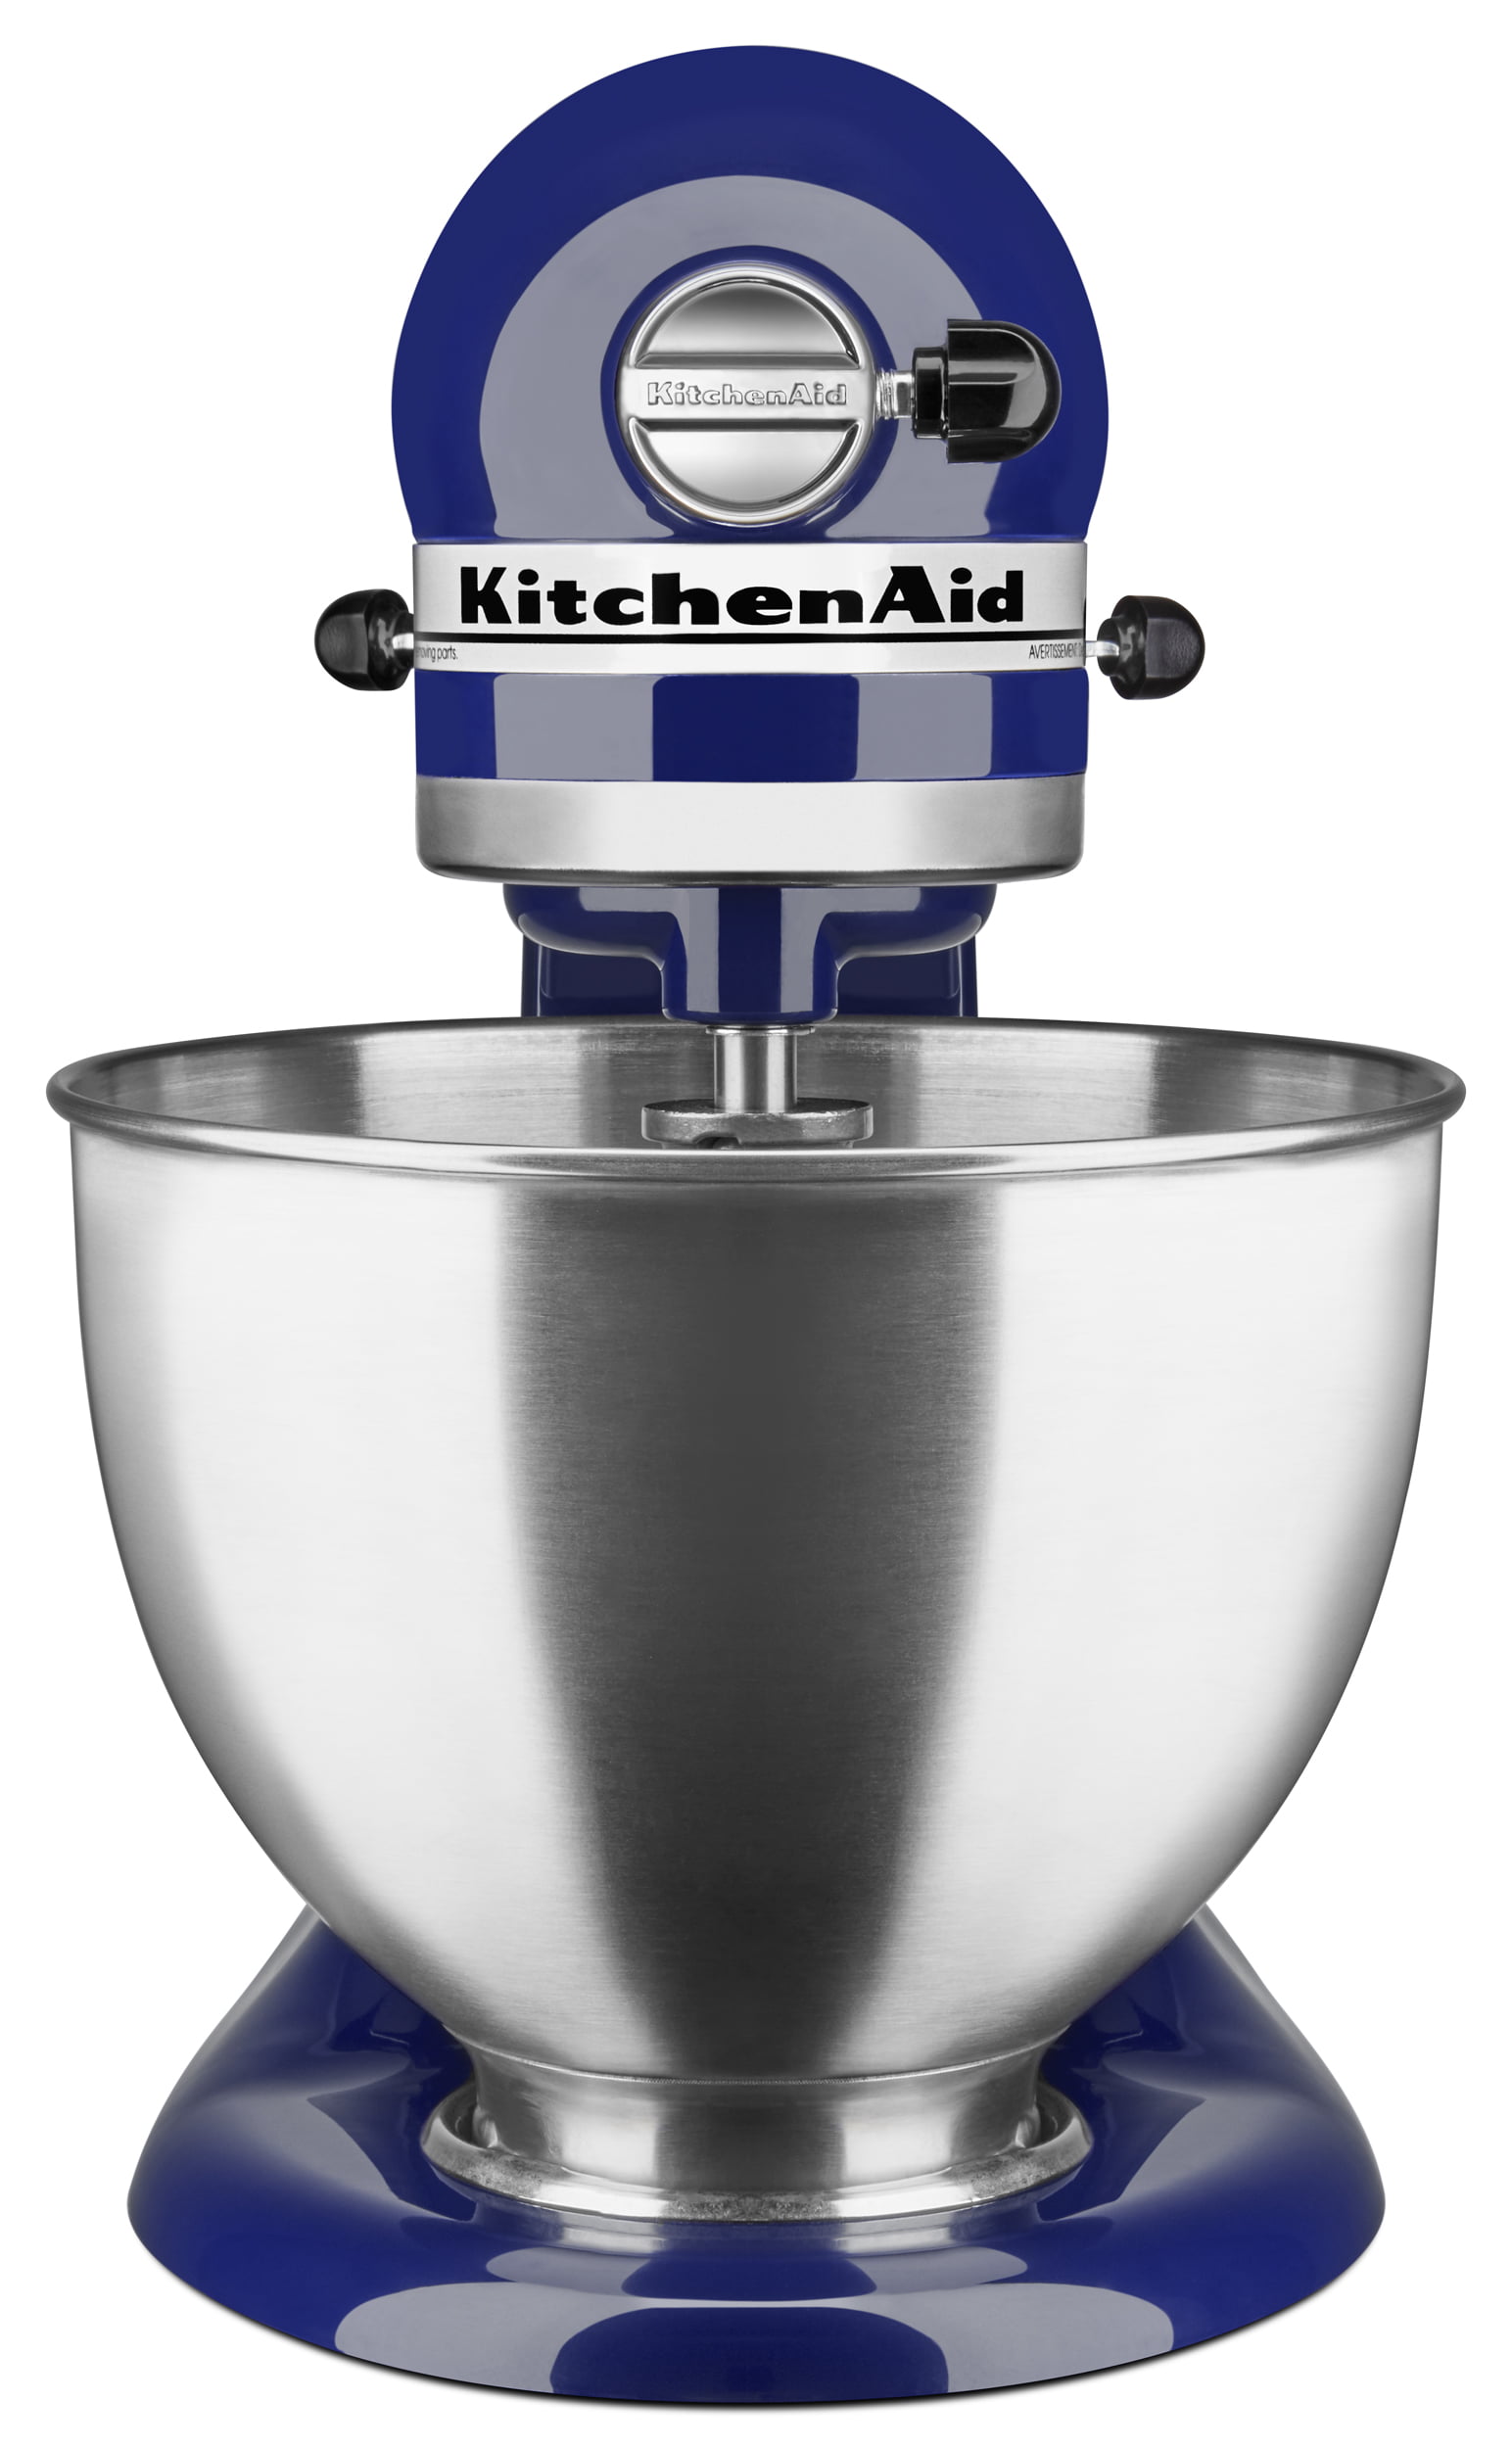 Dishwasher Safe 1 PCS For Kitchenaid 4.5-5 Quart Tilt Head Stand Mixer Bowl  Stainless Steel Silver For Kitchenaid Mixer Bowl - AliExpress